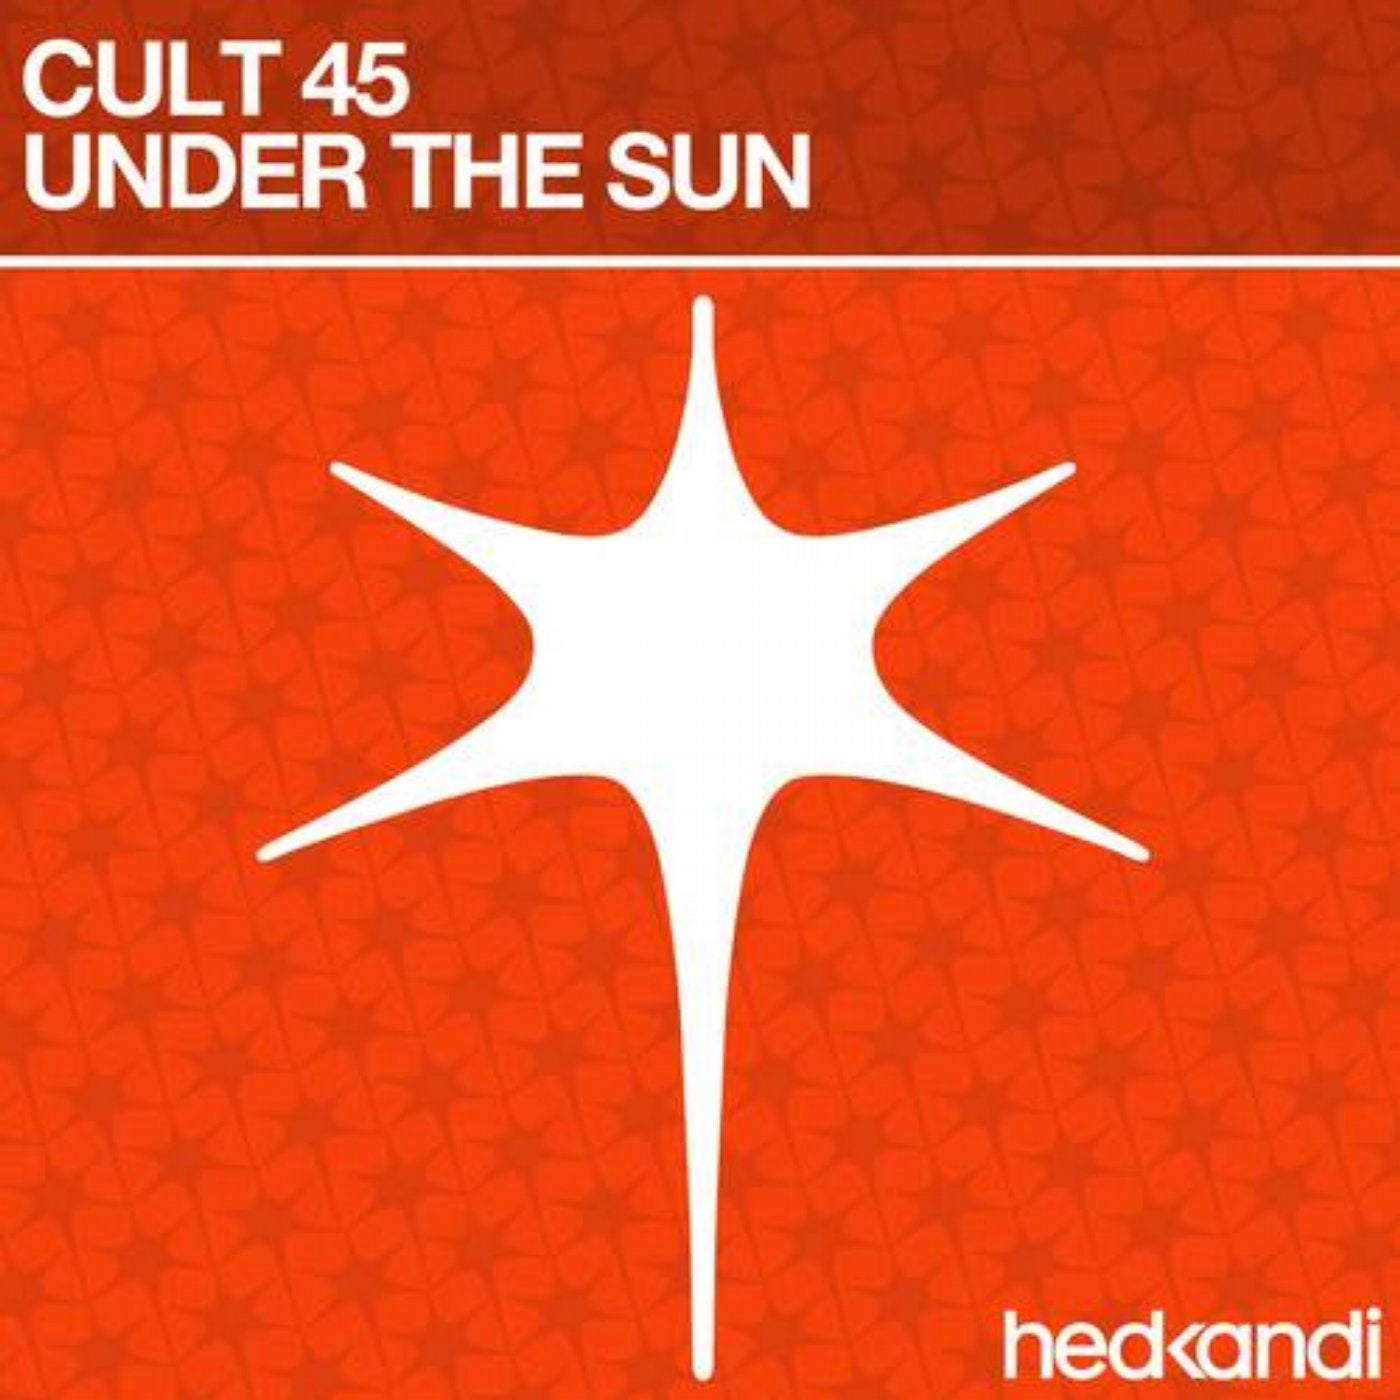 Cult 45 music download - Beatport